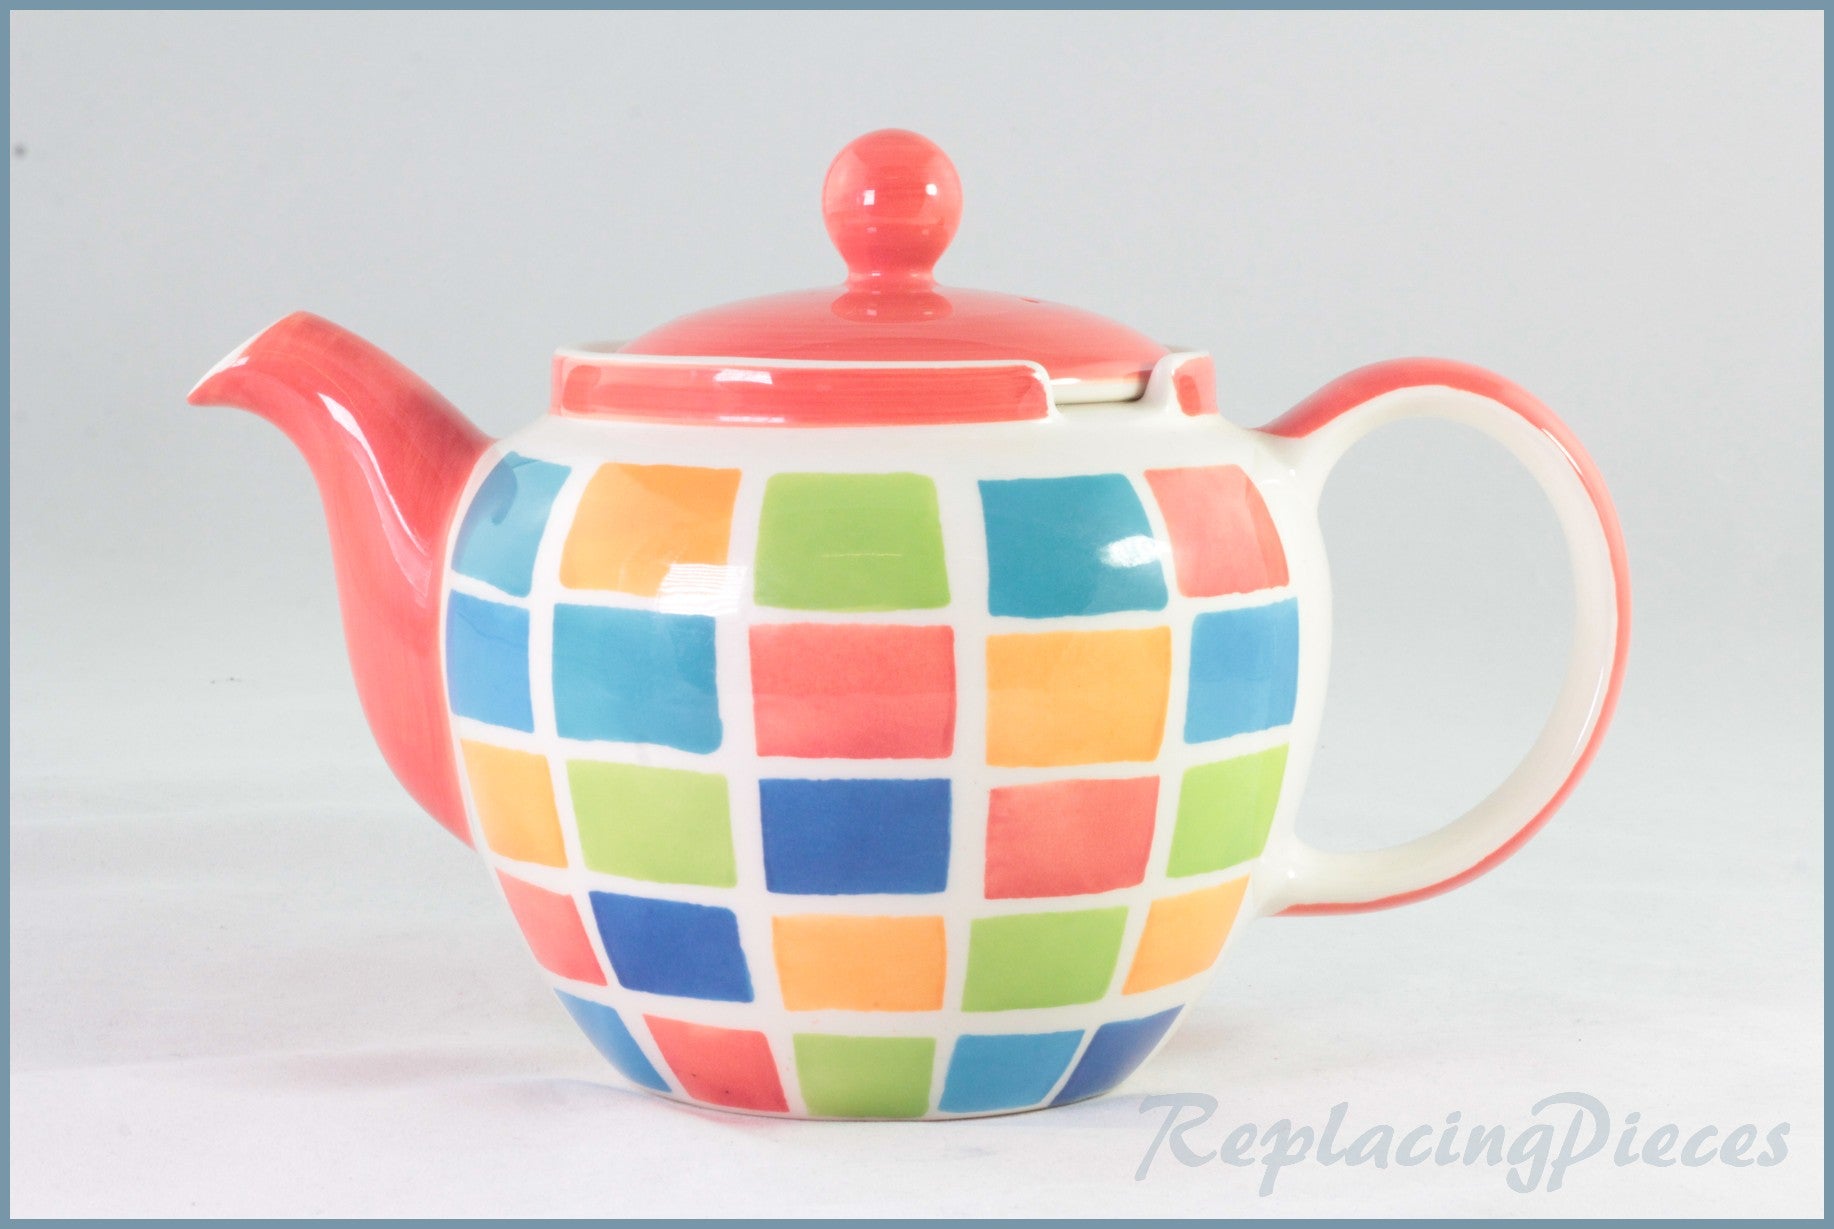 RPW120 - Whittards - Multi Coloured Squares Teapot (NO Strainer)